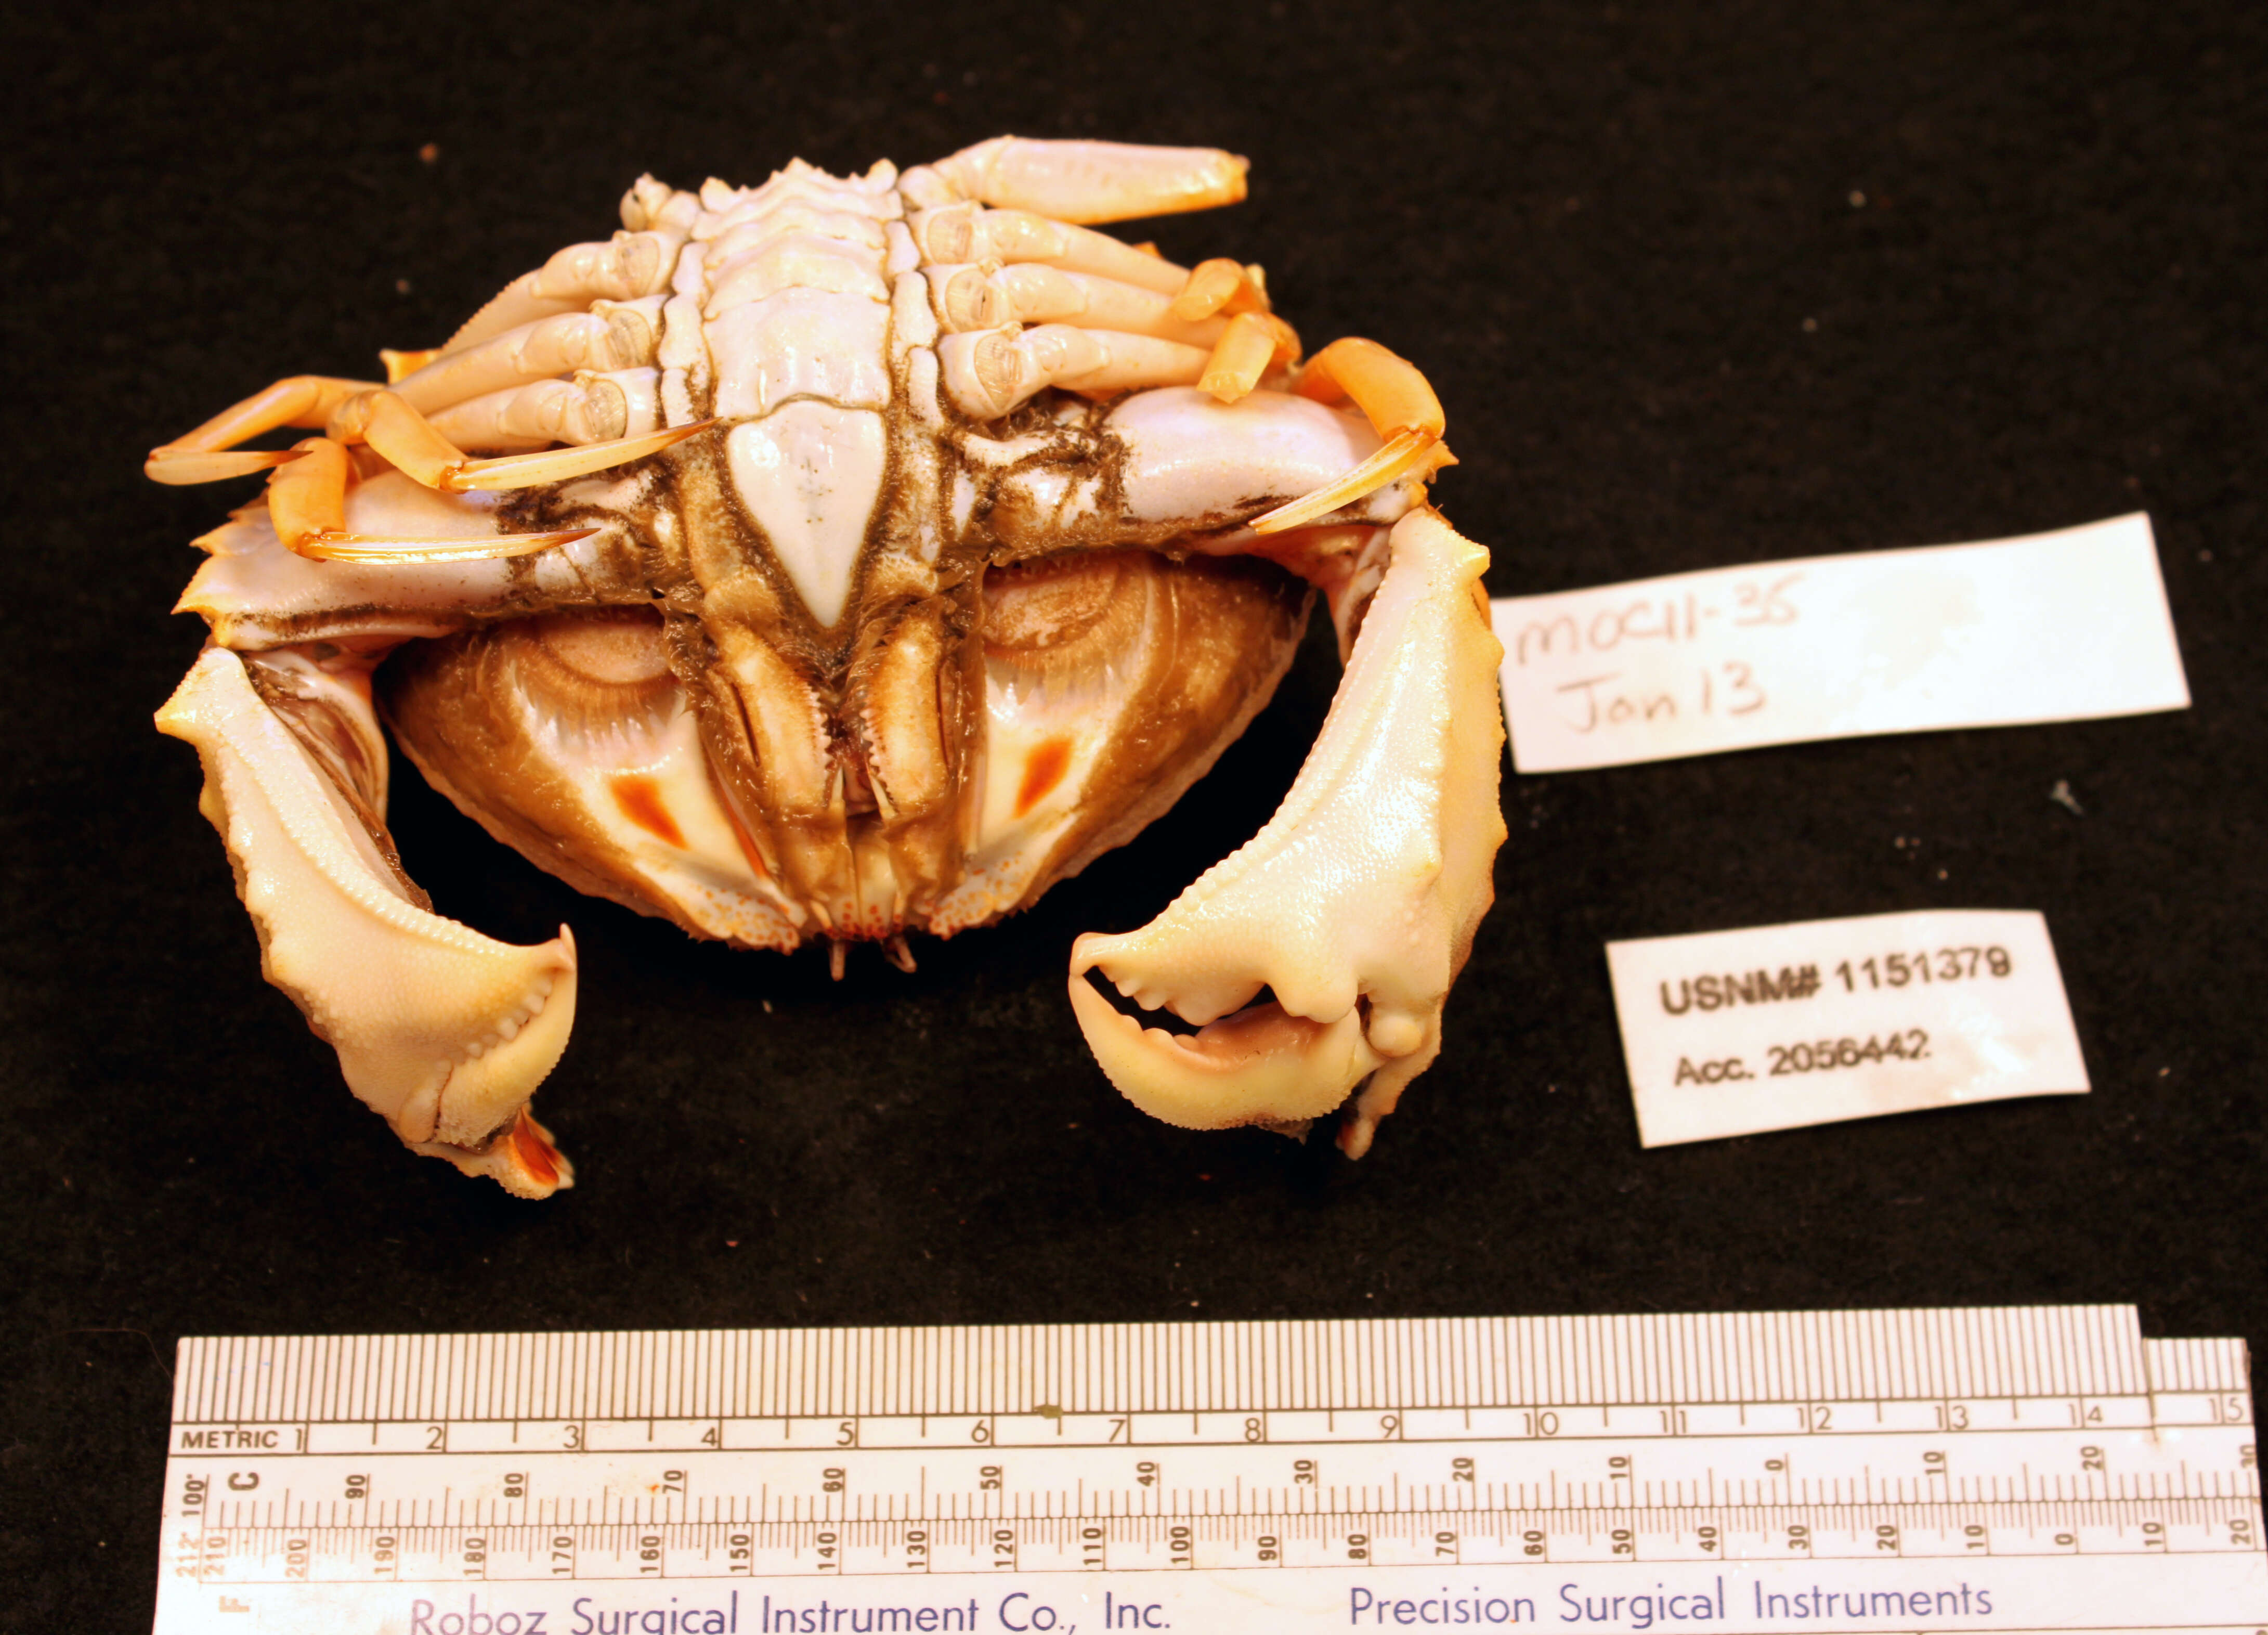 Image of yellow box crab